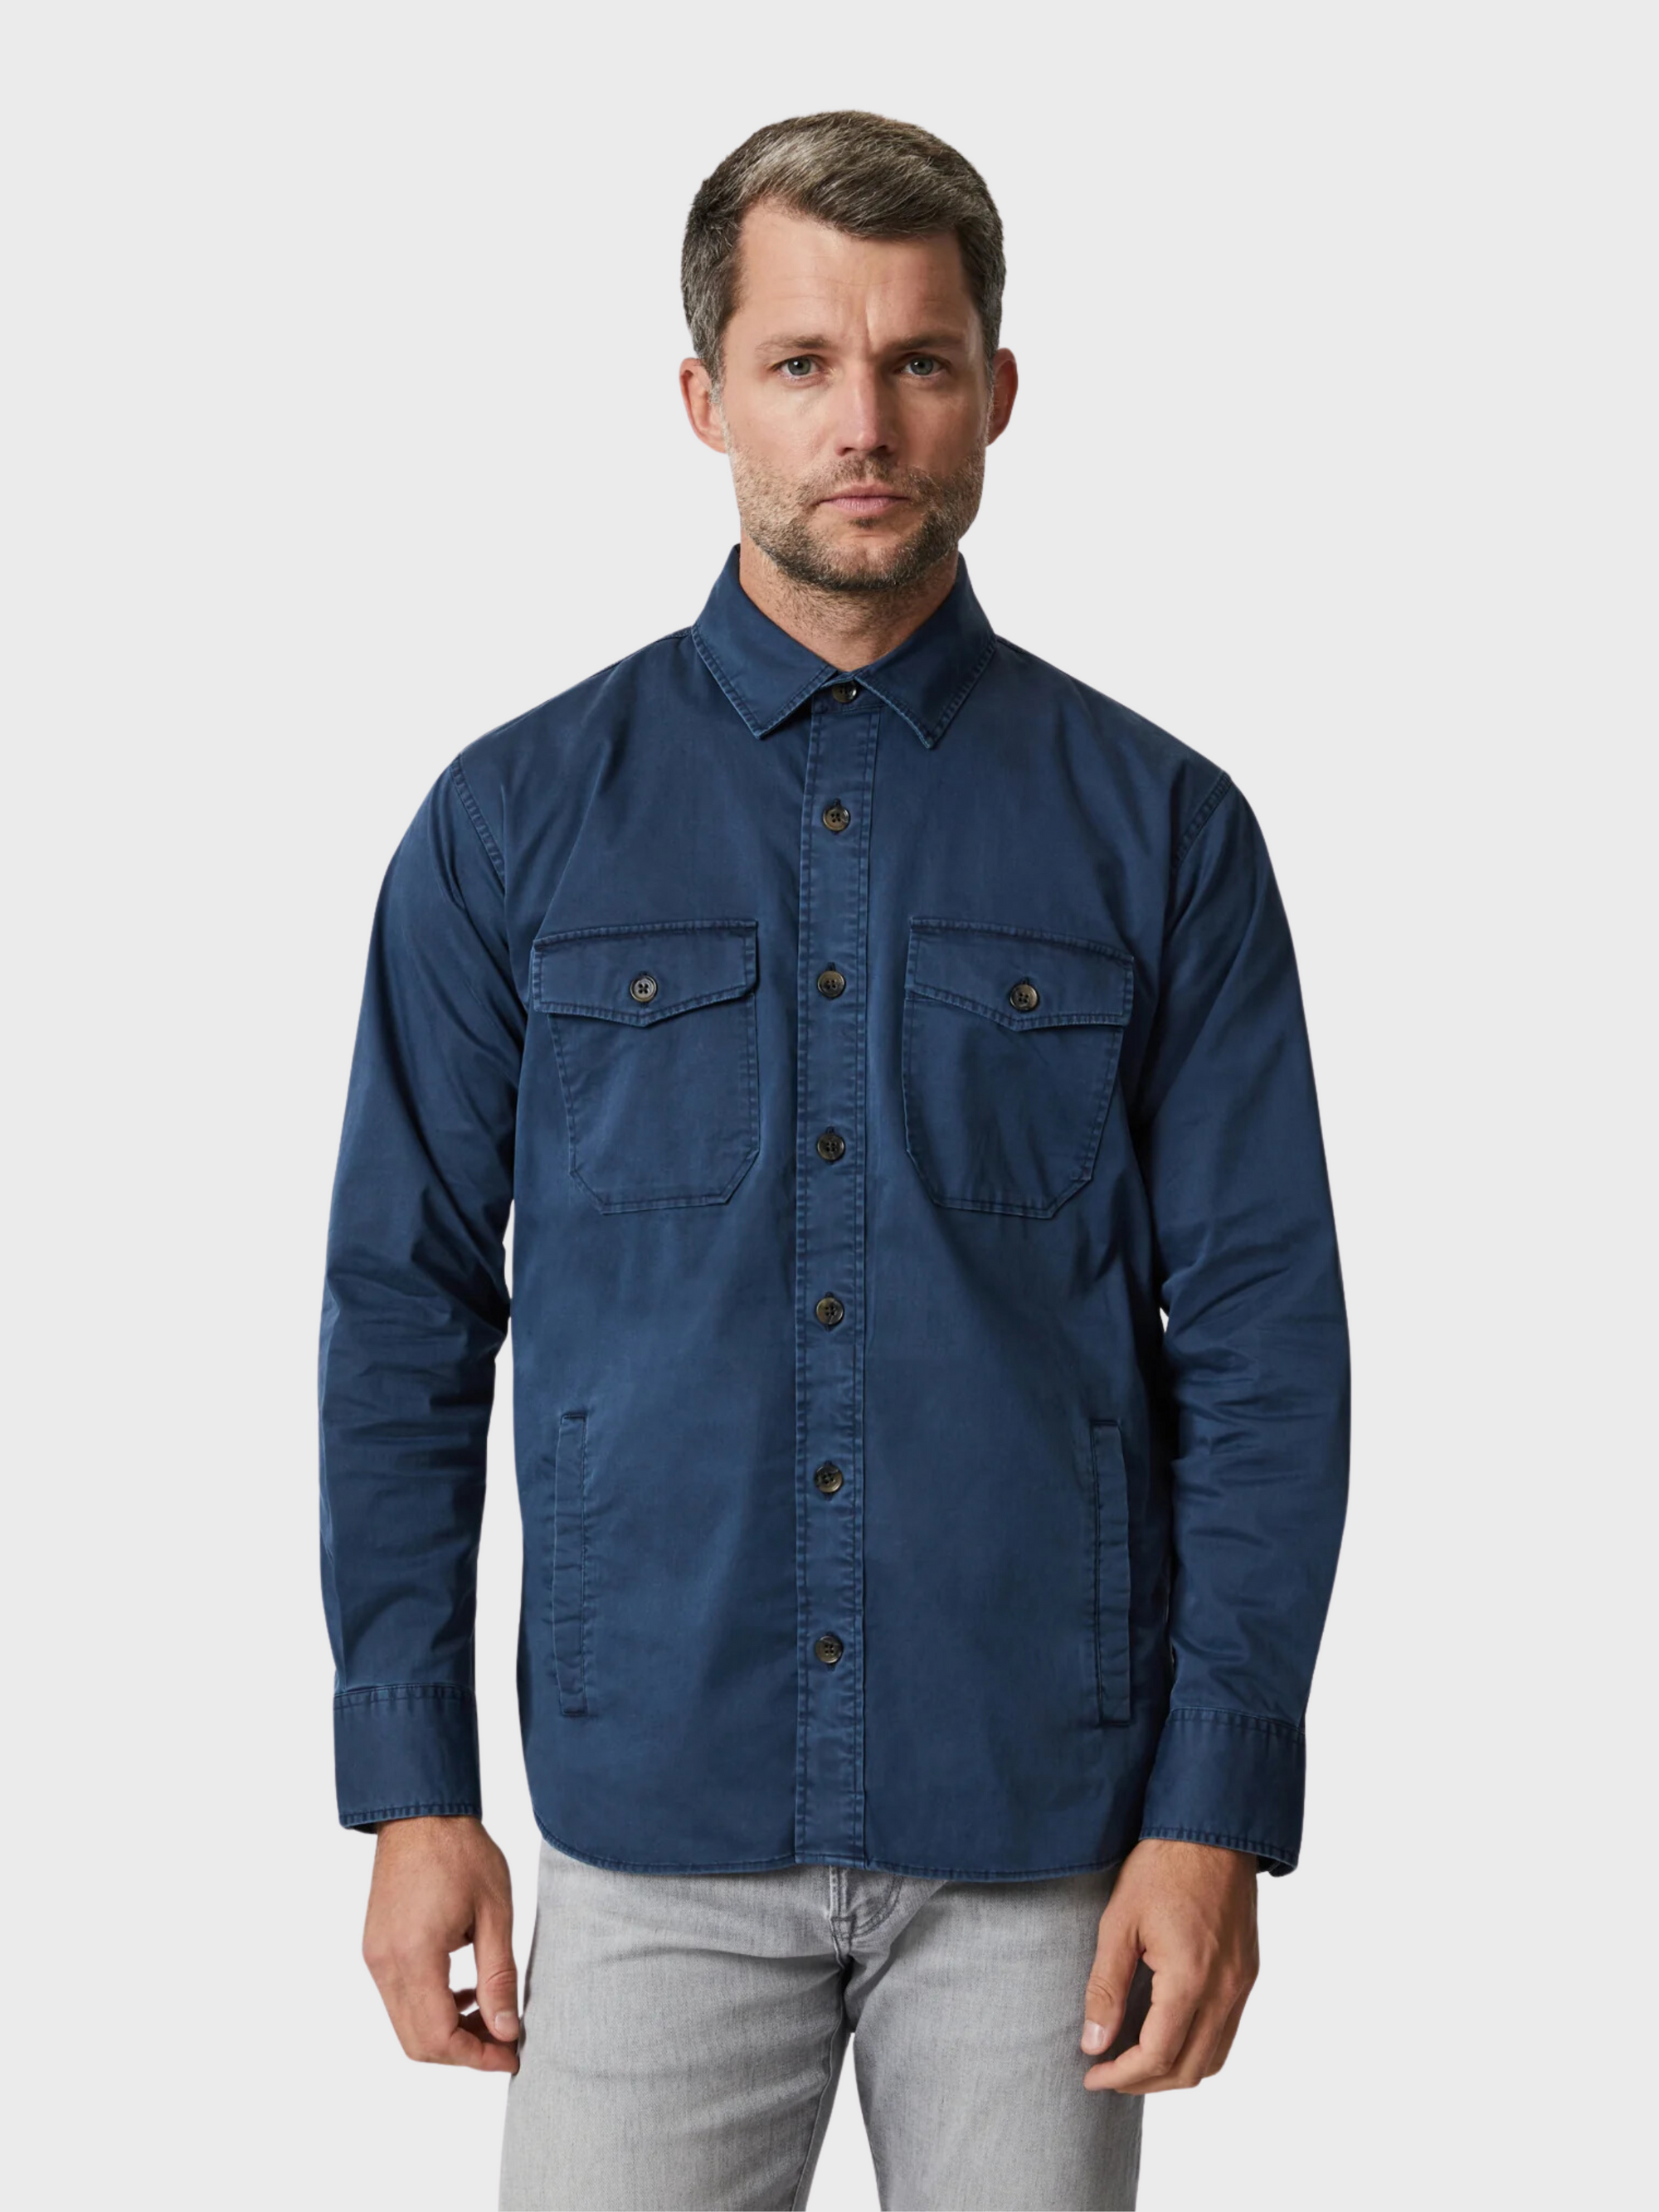 34 Heritage Overshirt Dark Blue-Men's Shirts-XL-Howard-Surrey-Canada